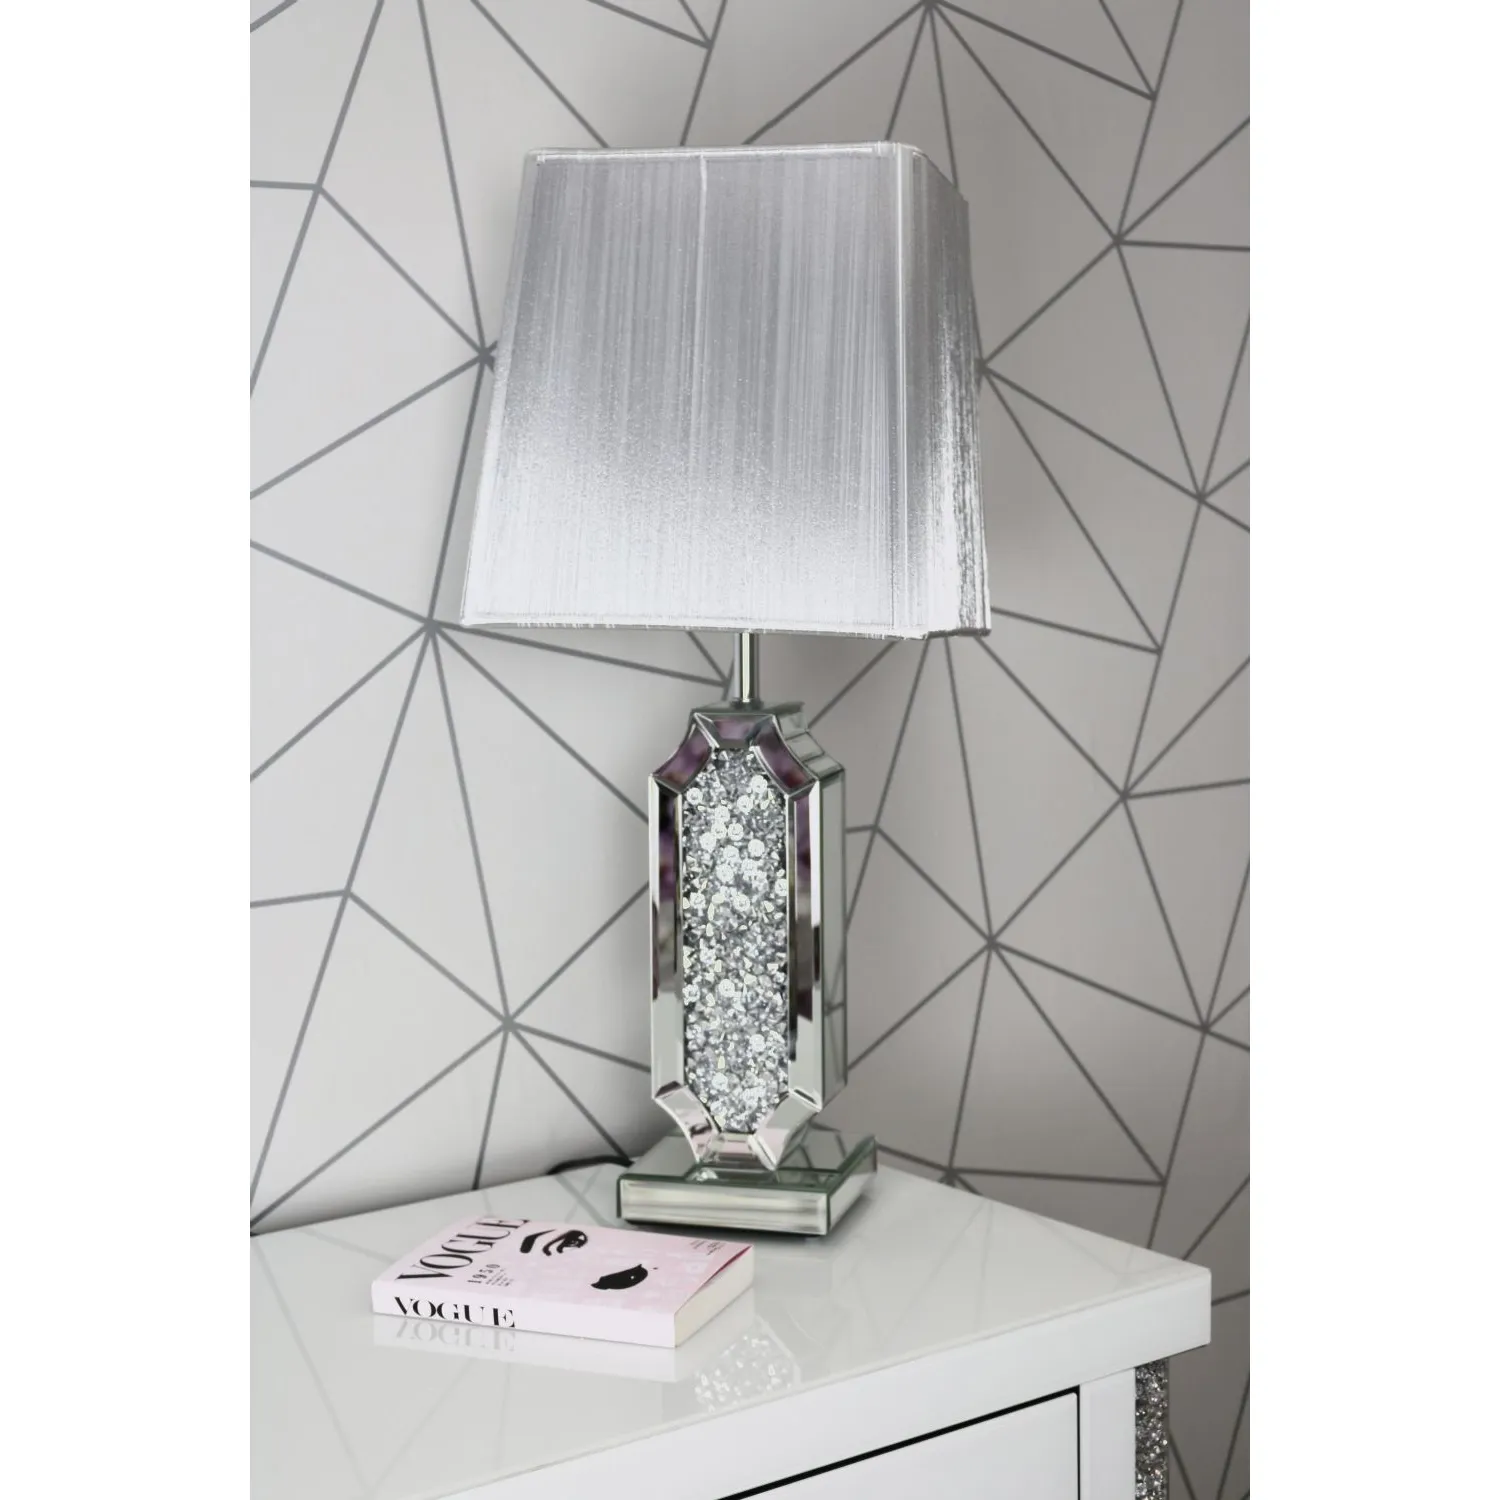 Luxe Mocka Mirror Crystal Deco Table Lamp Grey Shade